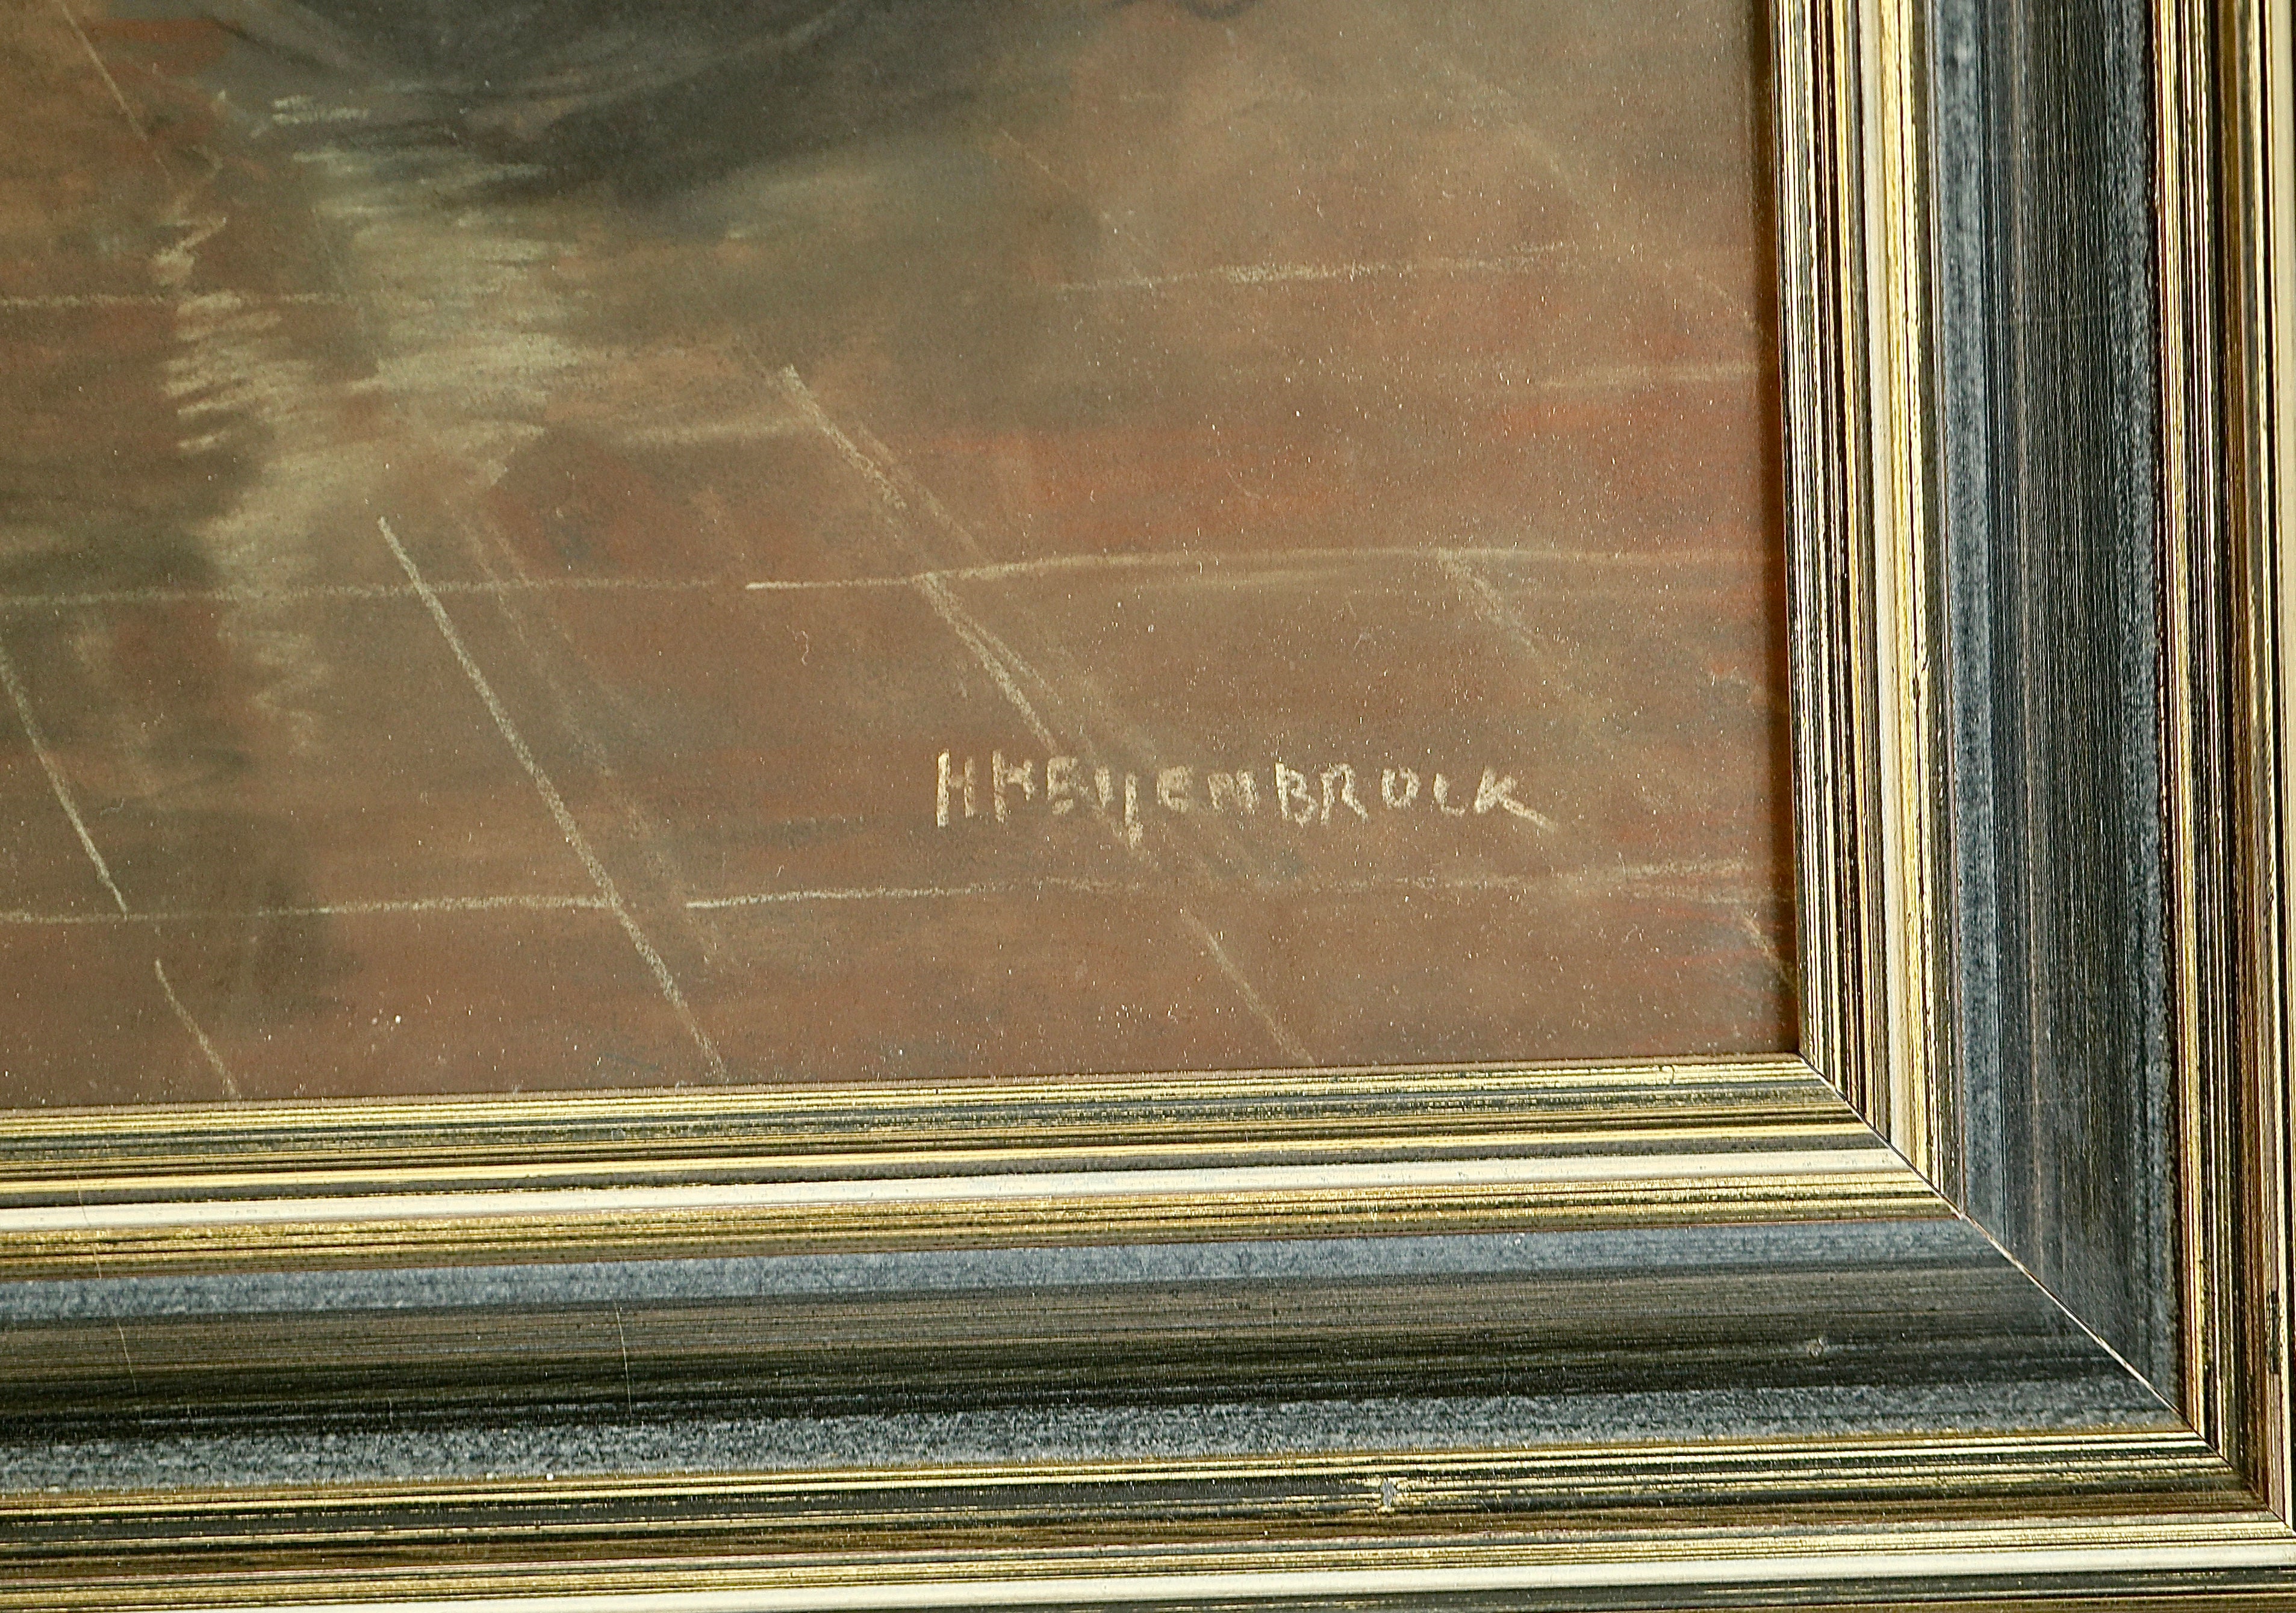 STUNNING WORK OF HERMAN HEIJENBROCK (1871-1948)